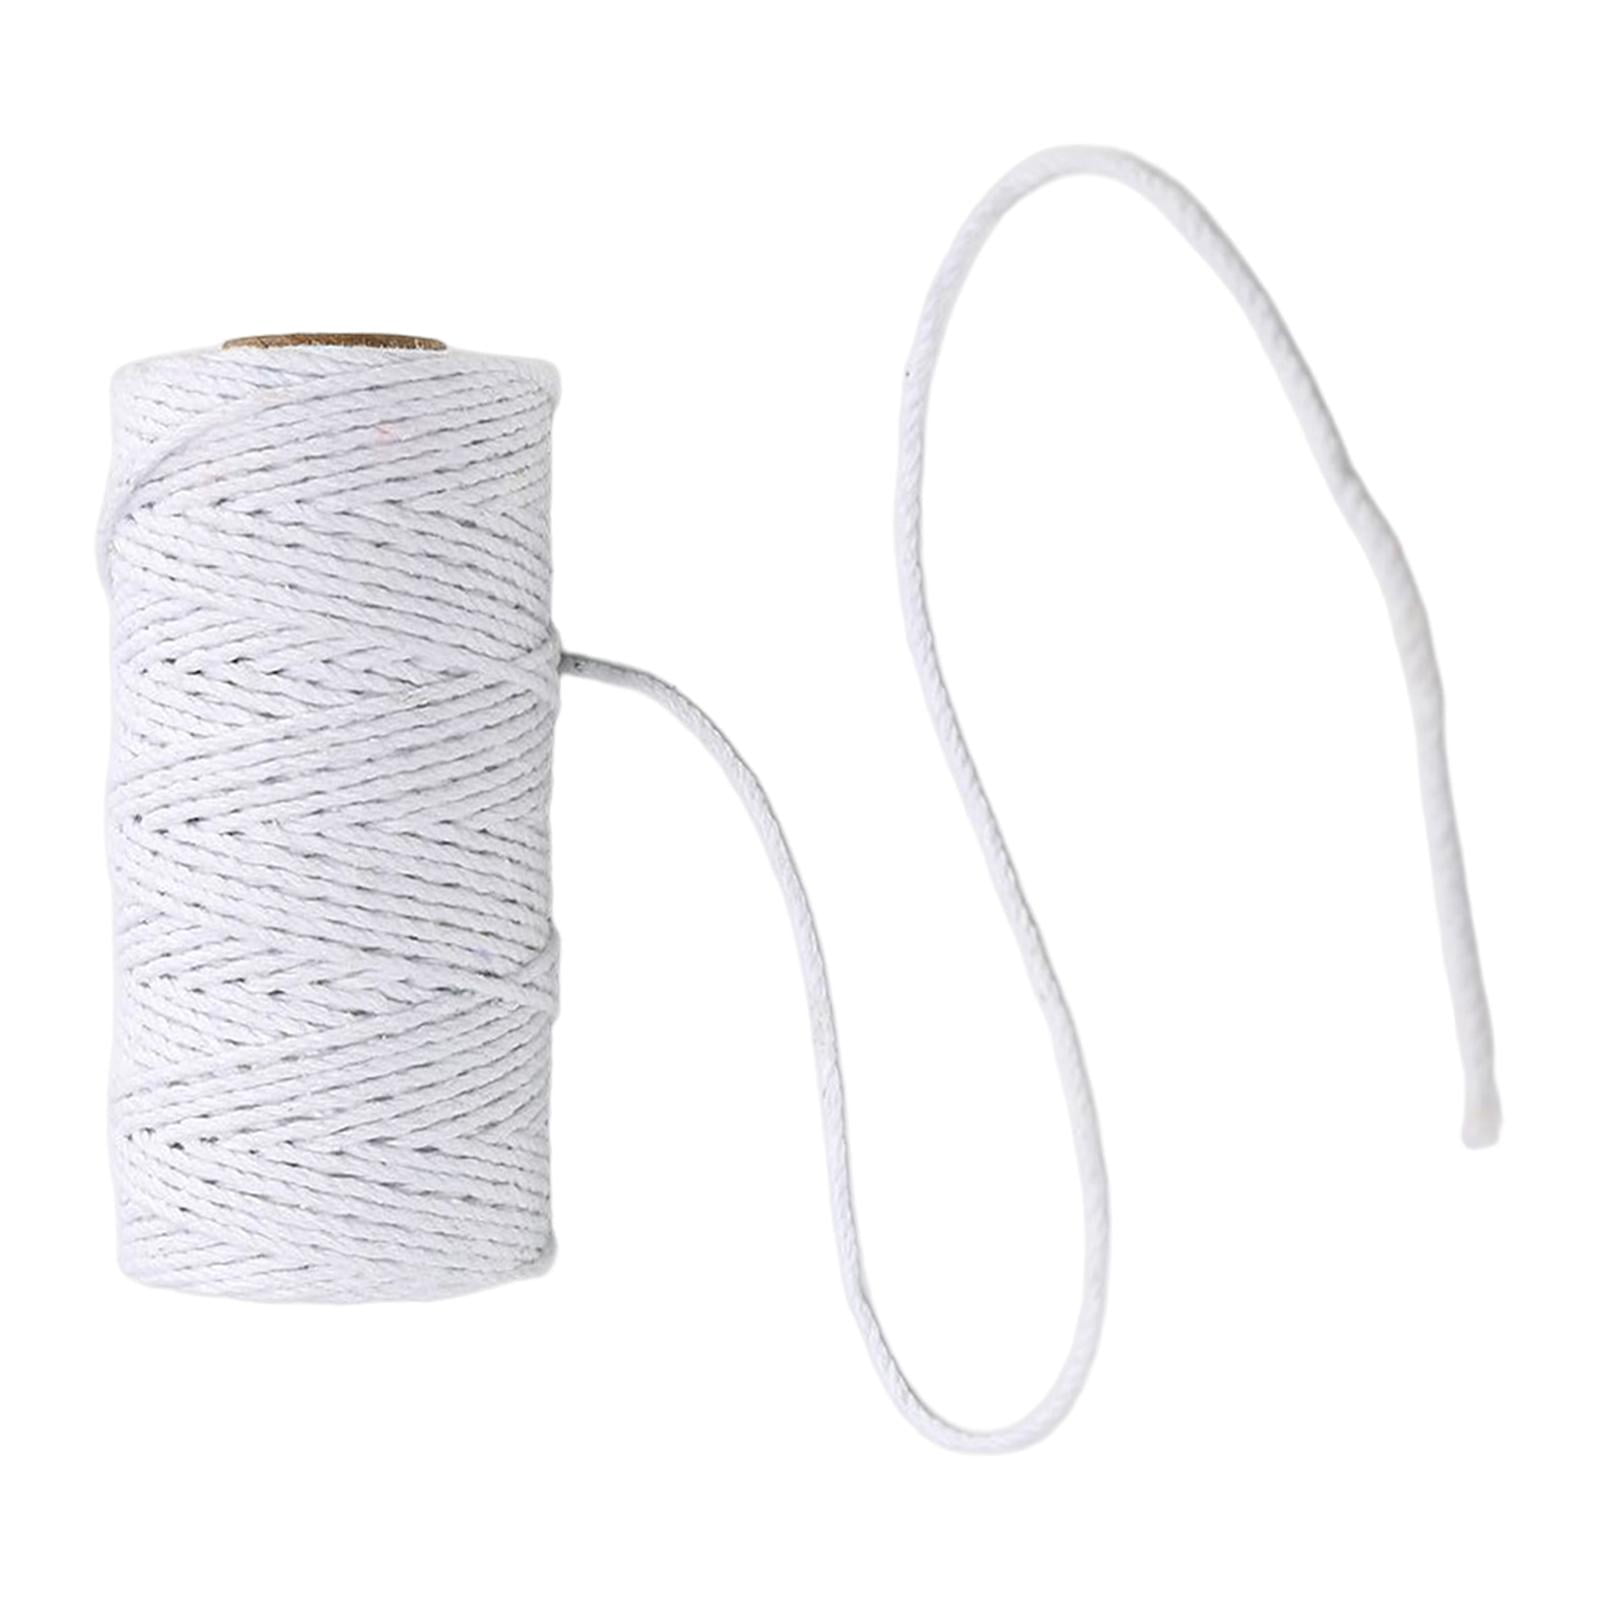 100m Cotton Crafts Rope Long/100Yard Cord String Macrame Home Textiles Circular  Knitting Needles Interchangeable Circular Knitting Needles Size 8 Circular  Knitting Needles Size 6 Circular Knitting 